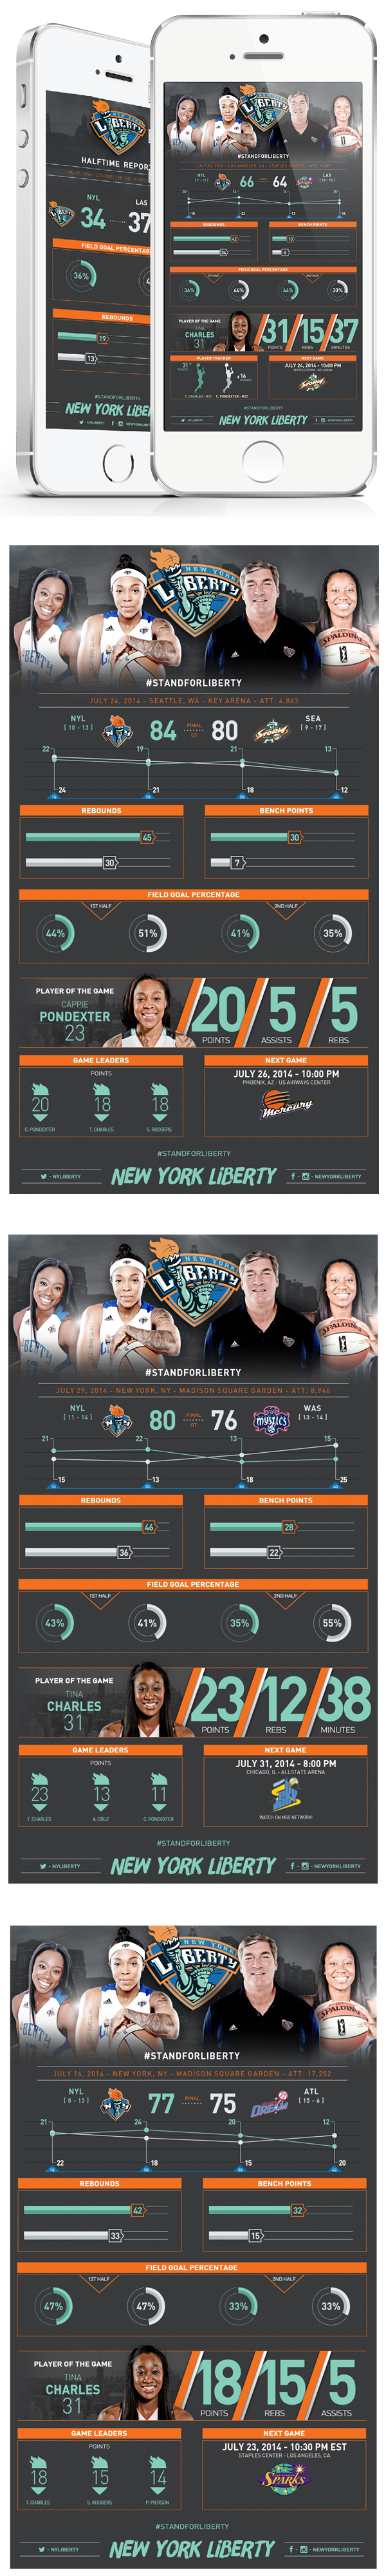 infographic WNBA new york liberty NYLiberty basketball